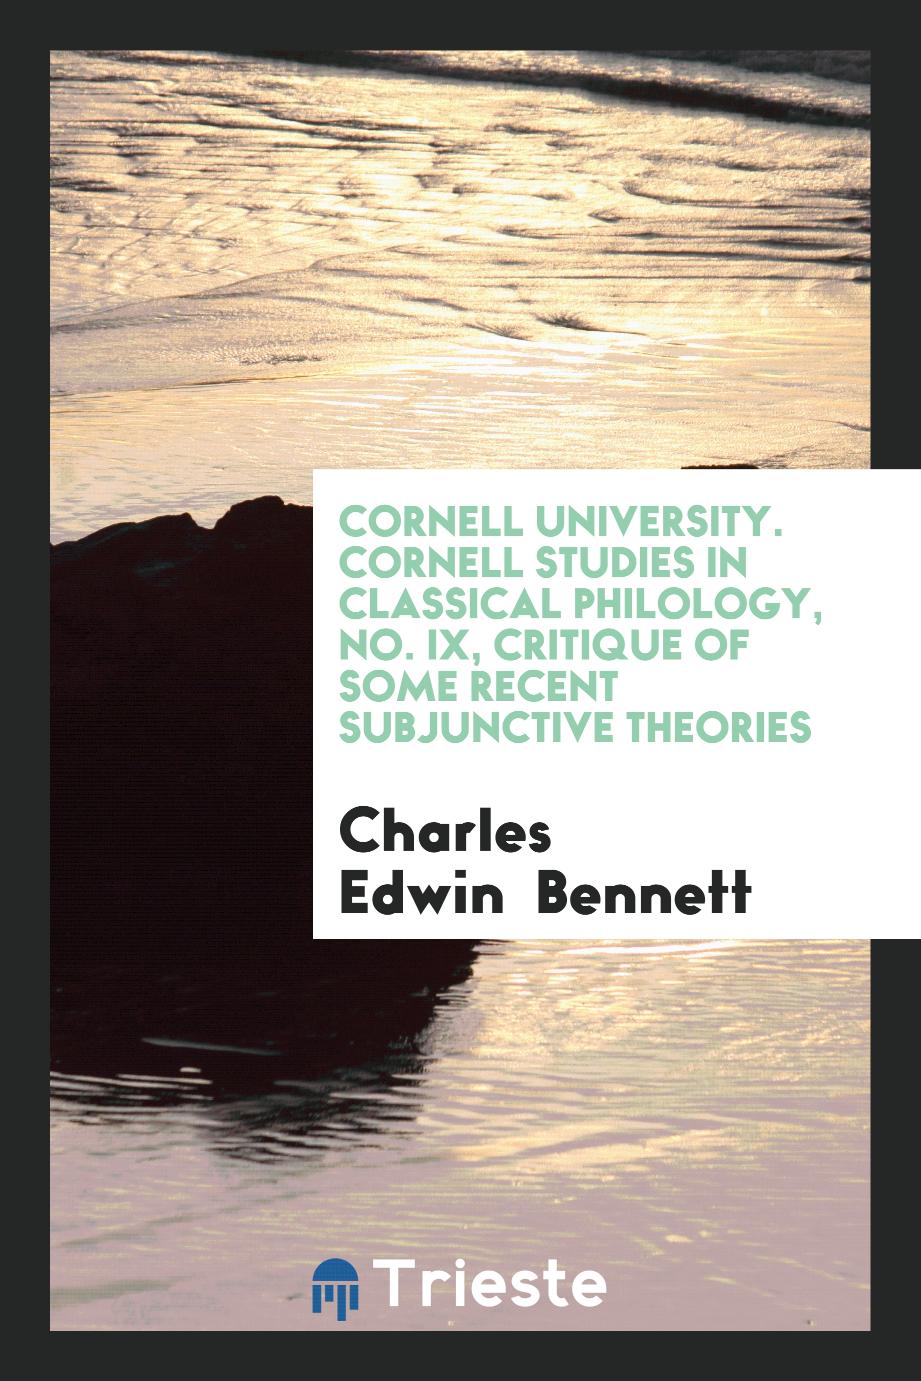 Cornell University. Cornell studies in classical philology, No. IX, Critique of Some Recent Subjunctive Theories